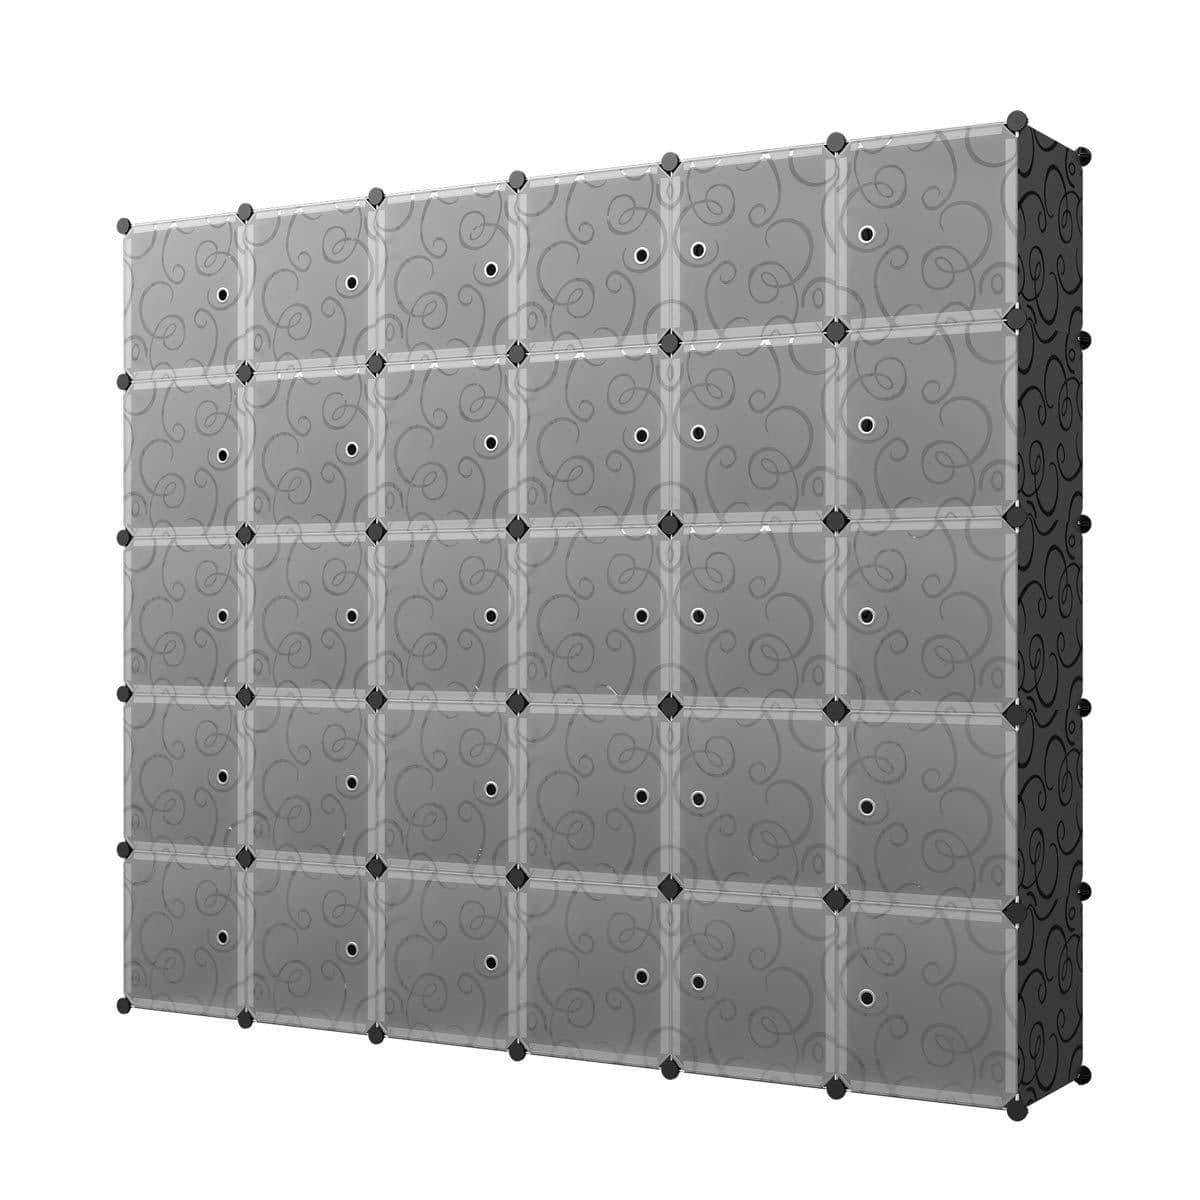 Amazon best kousi cube organizer storage cubes organizers and storage storage cube cube storage shelves cubby shelving storage cabinet toy organizer cabinet black 30 cubes